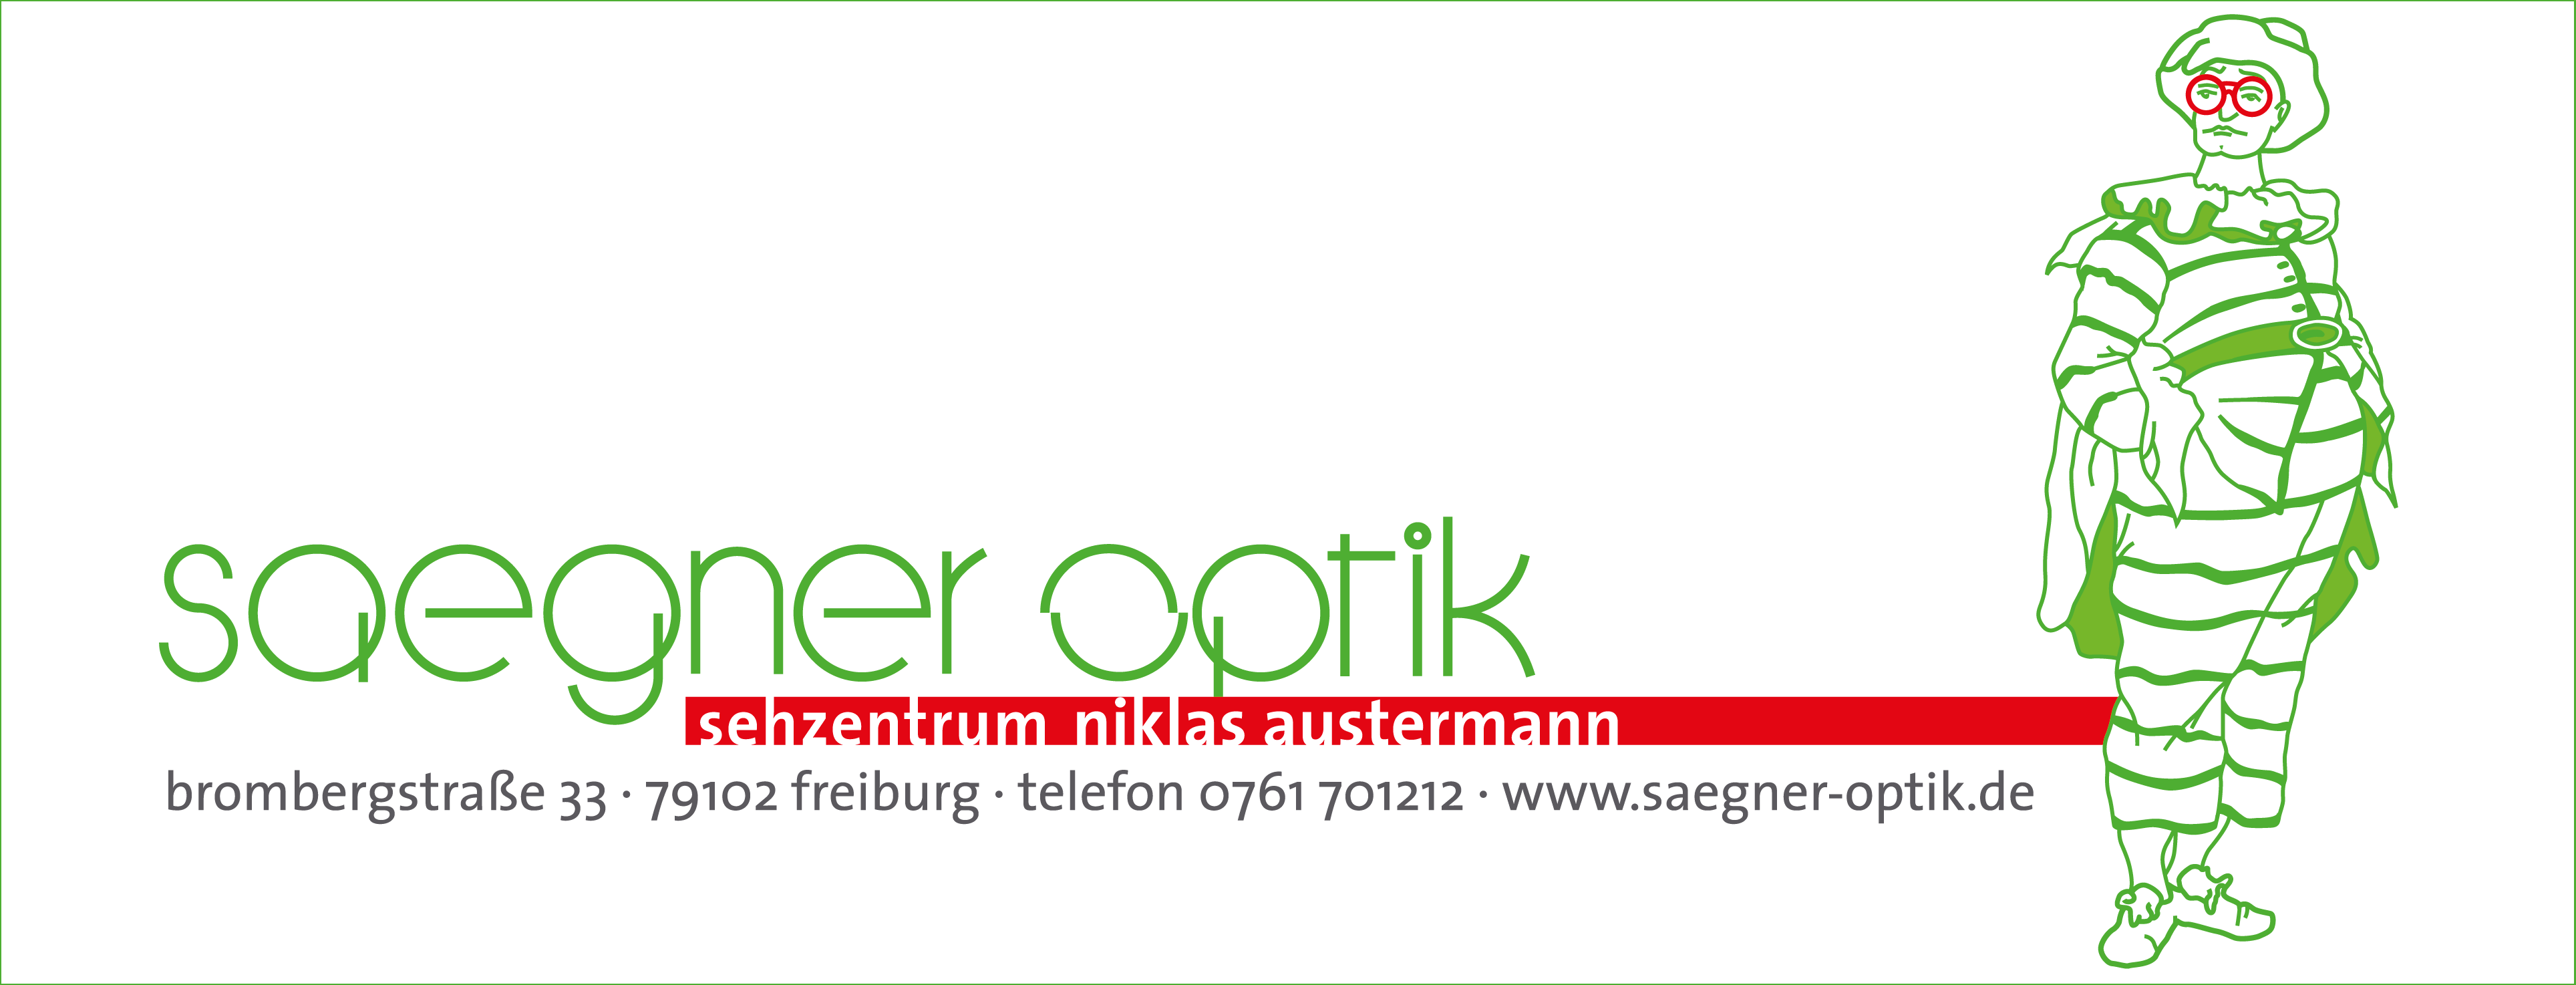 Saegner Optik, Freiburg (Logo)